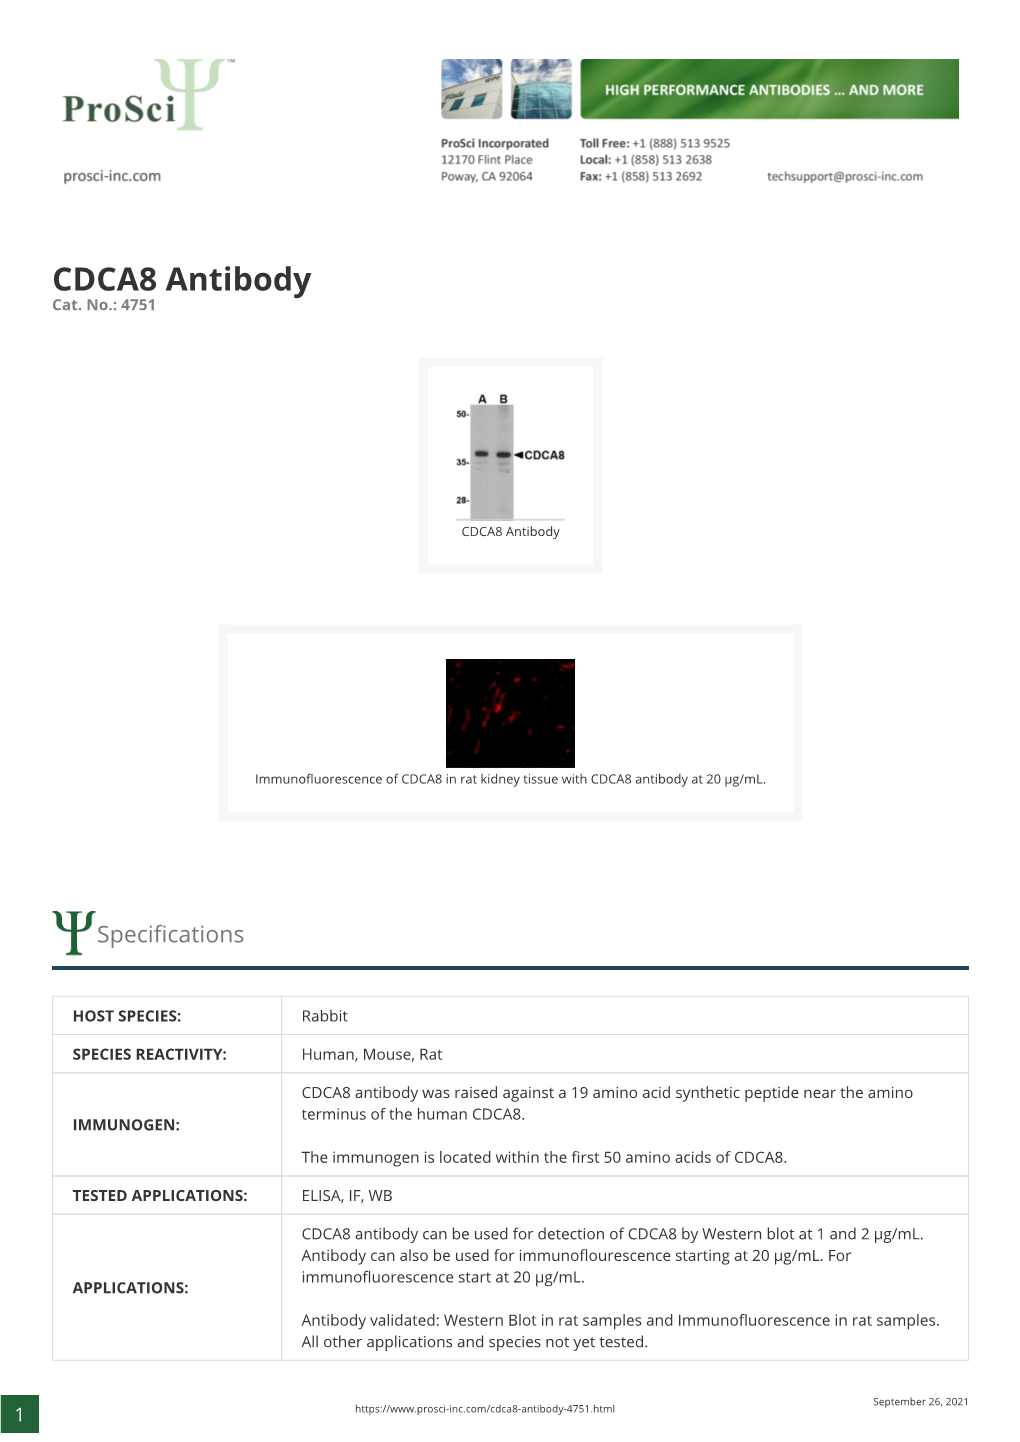 CDCA8 Antibody Cat